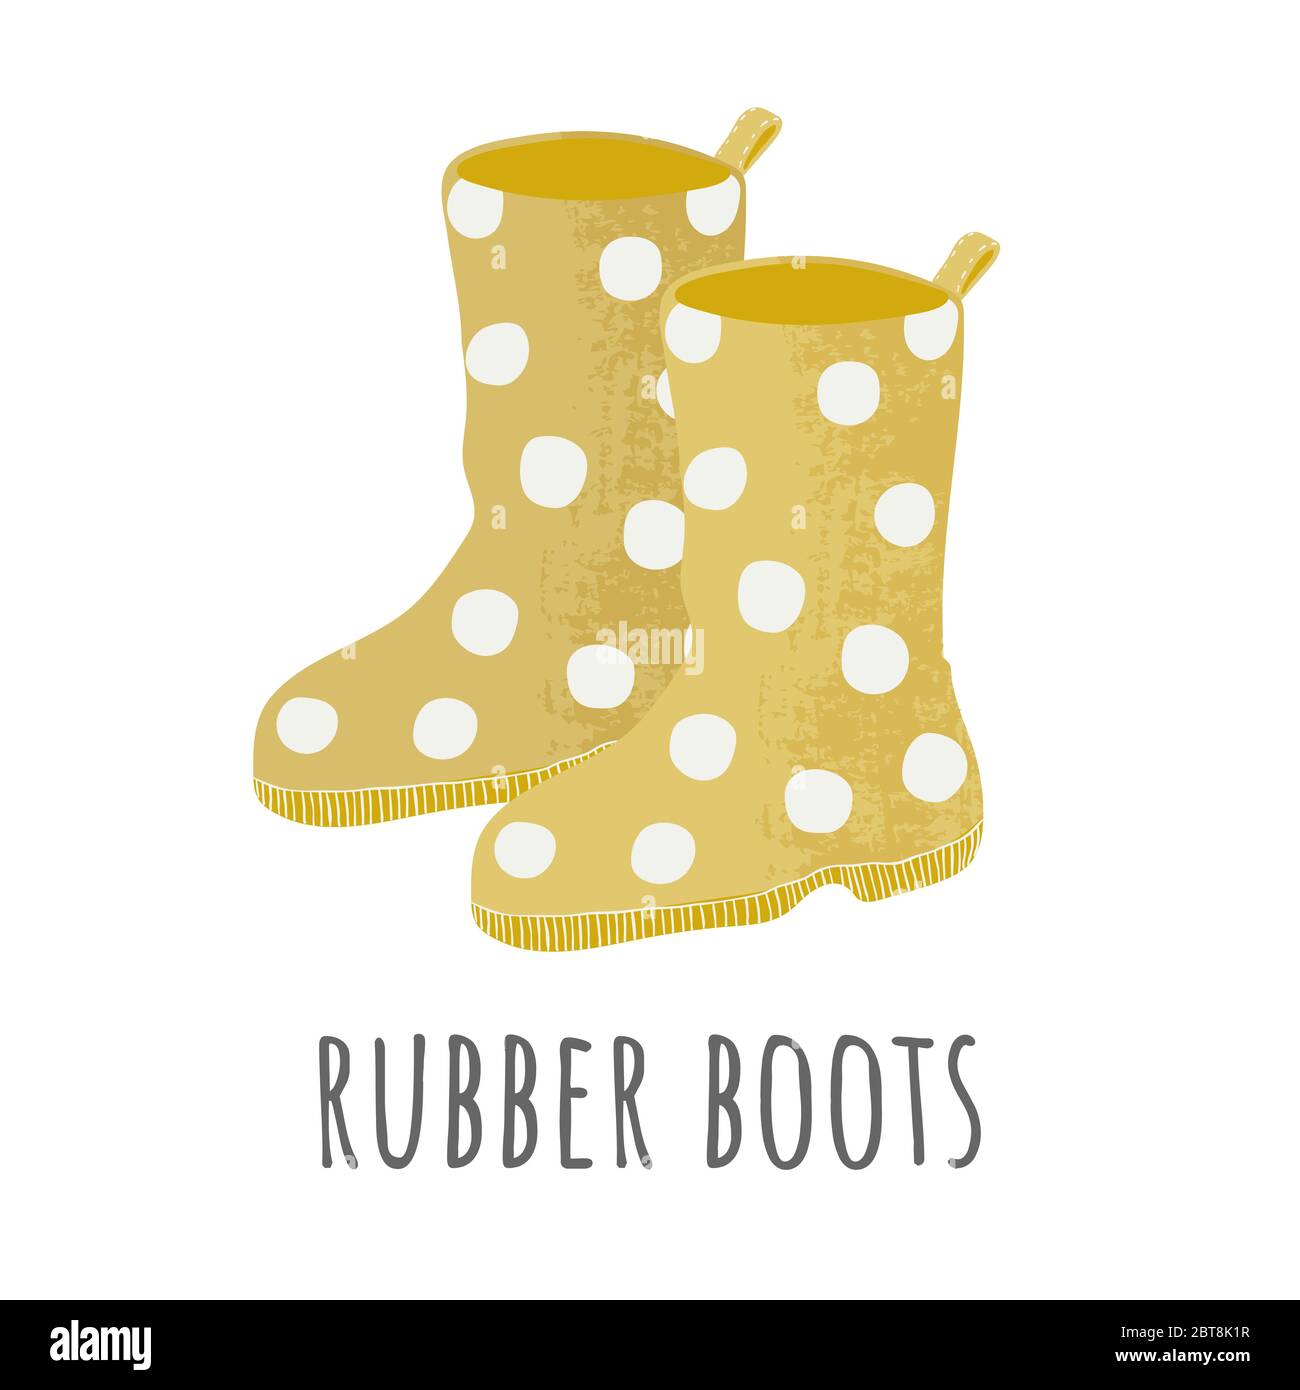 yellow rain boots clipart